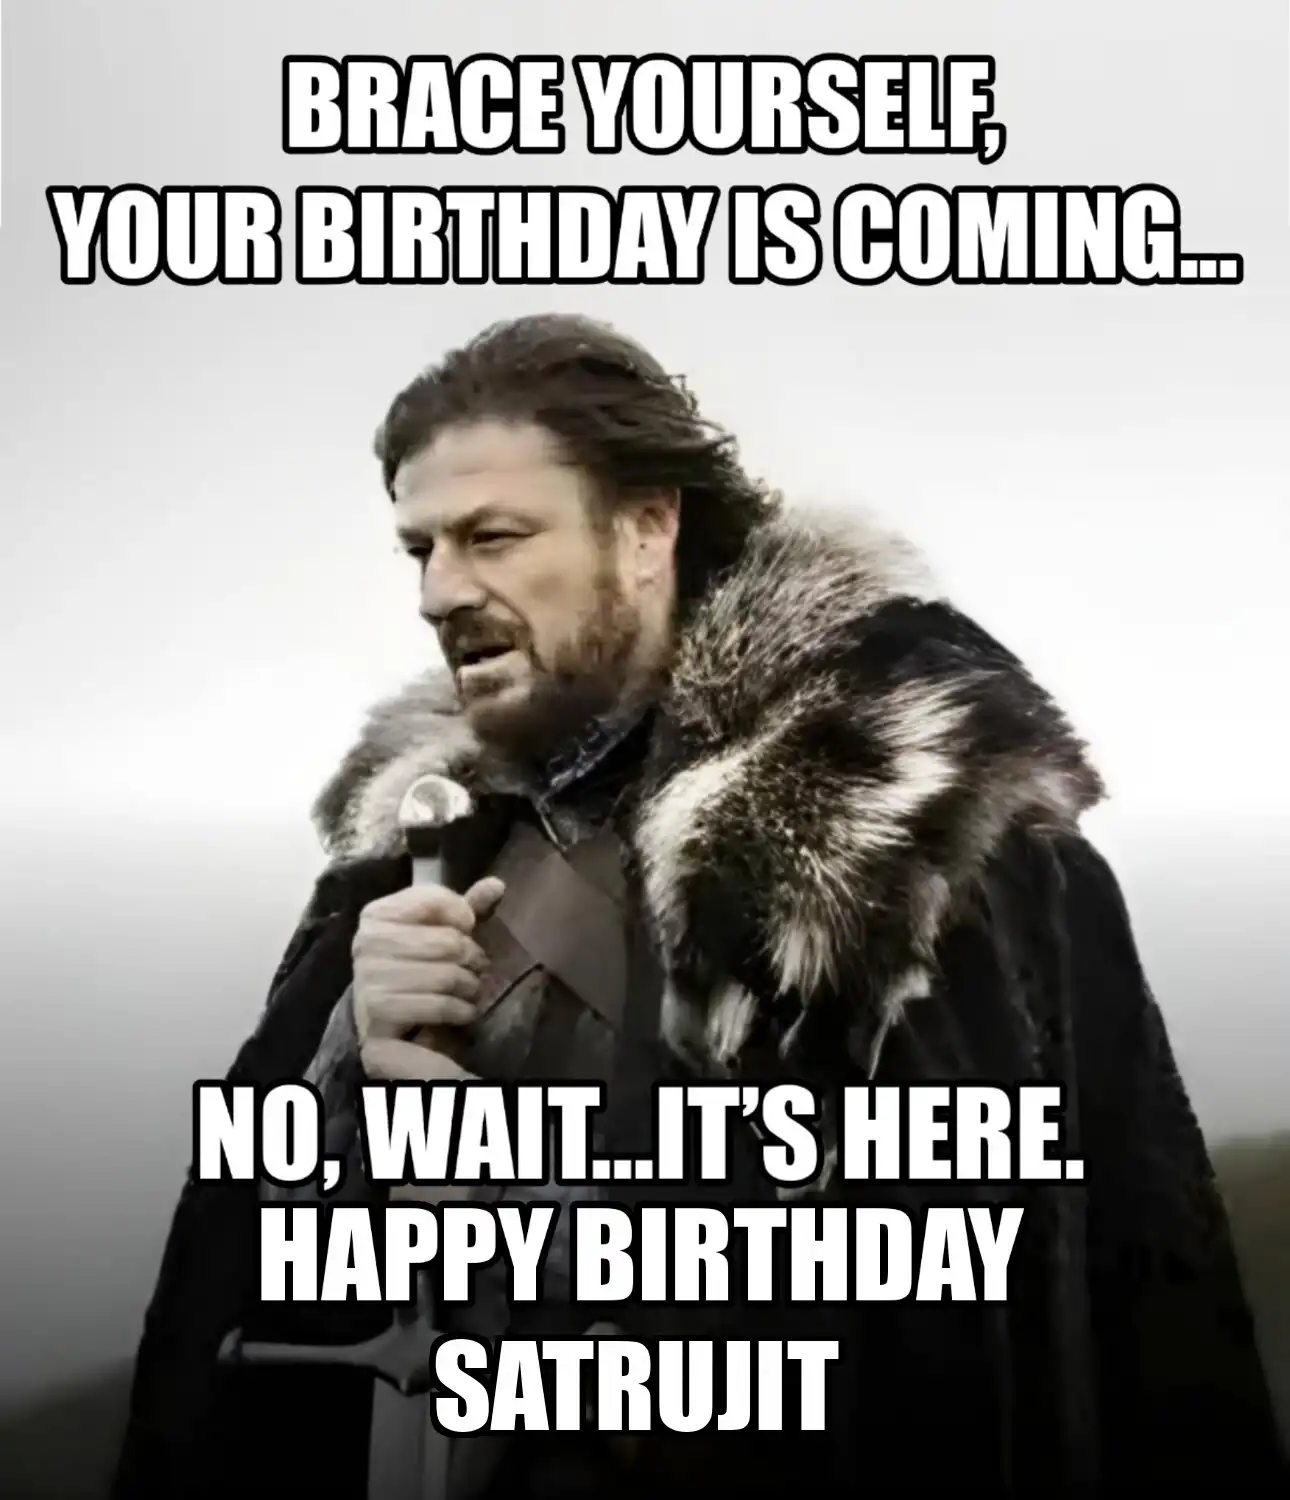 Happy Birthday Satrujit Brace Yourself Your Birthday Is Coming Meme